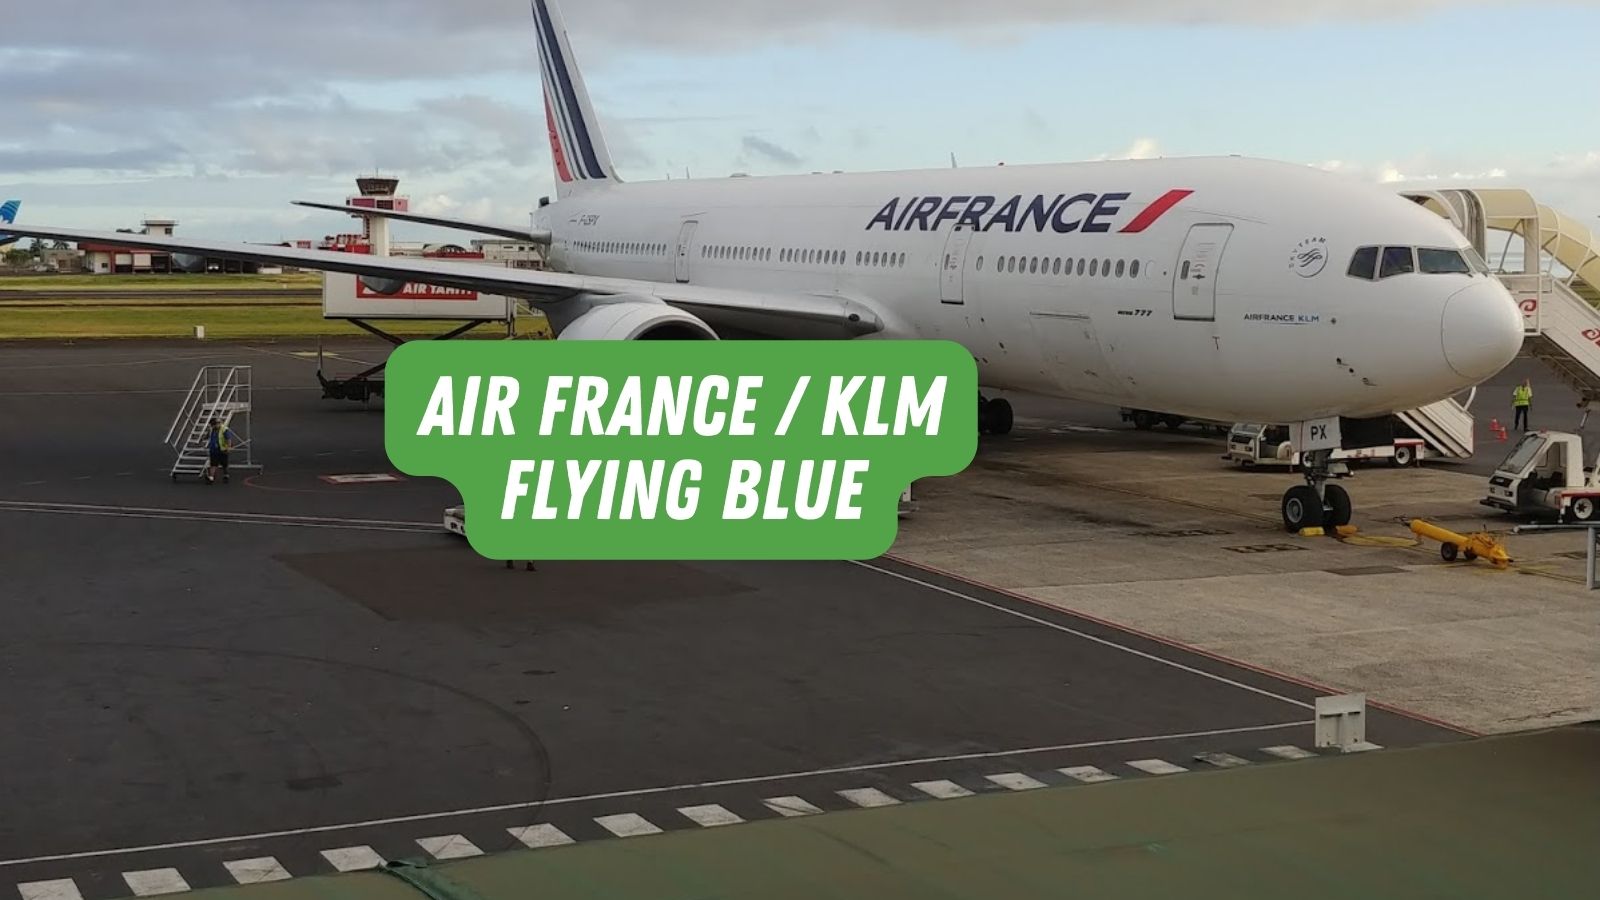 Air France/KLM Amex Offer: Spend $1,000 & Get 20,000 Membership Rewards